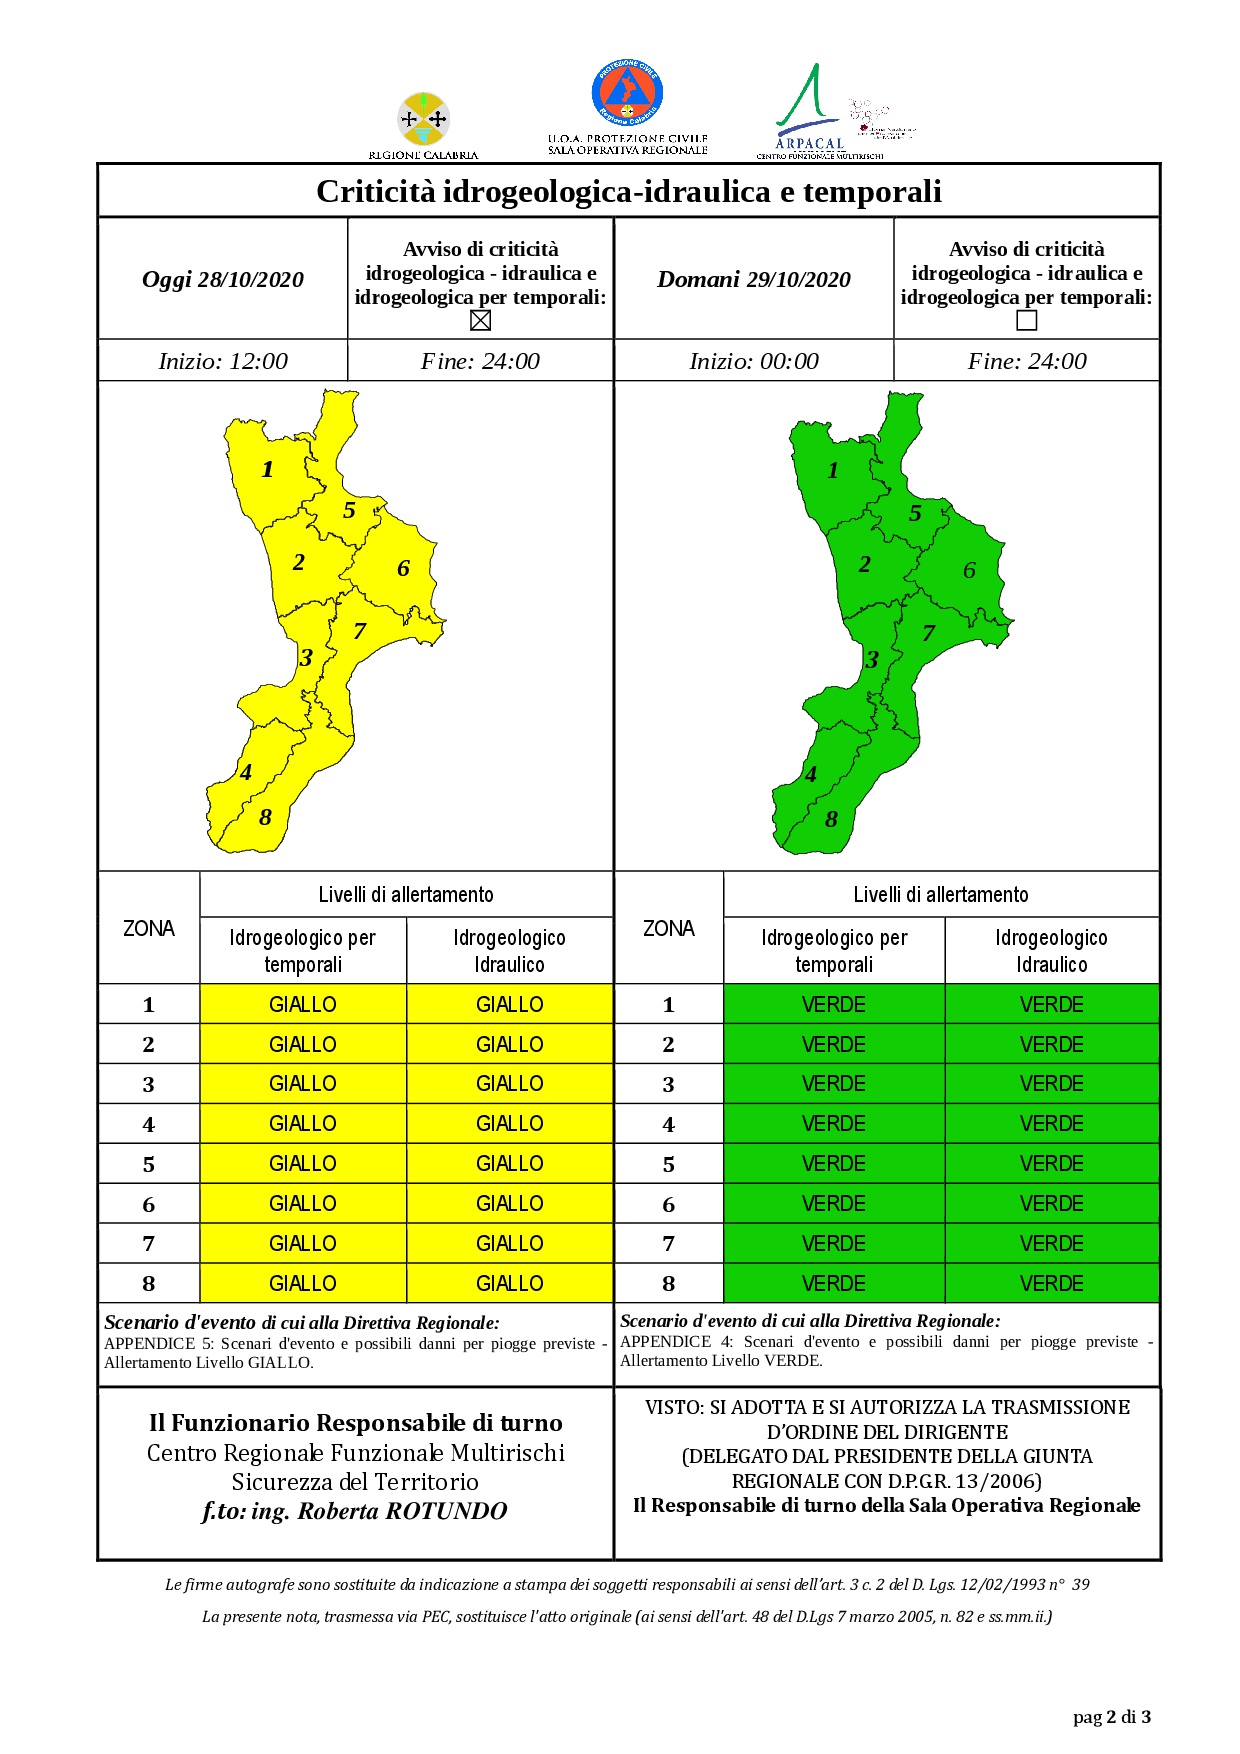 Criticità idrogeologica-idraulica e temporali in Calabria 28-10-2020